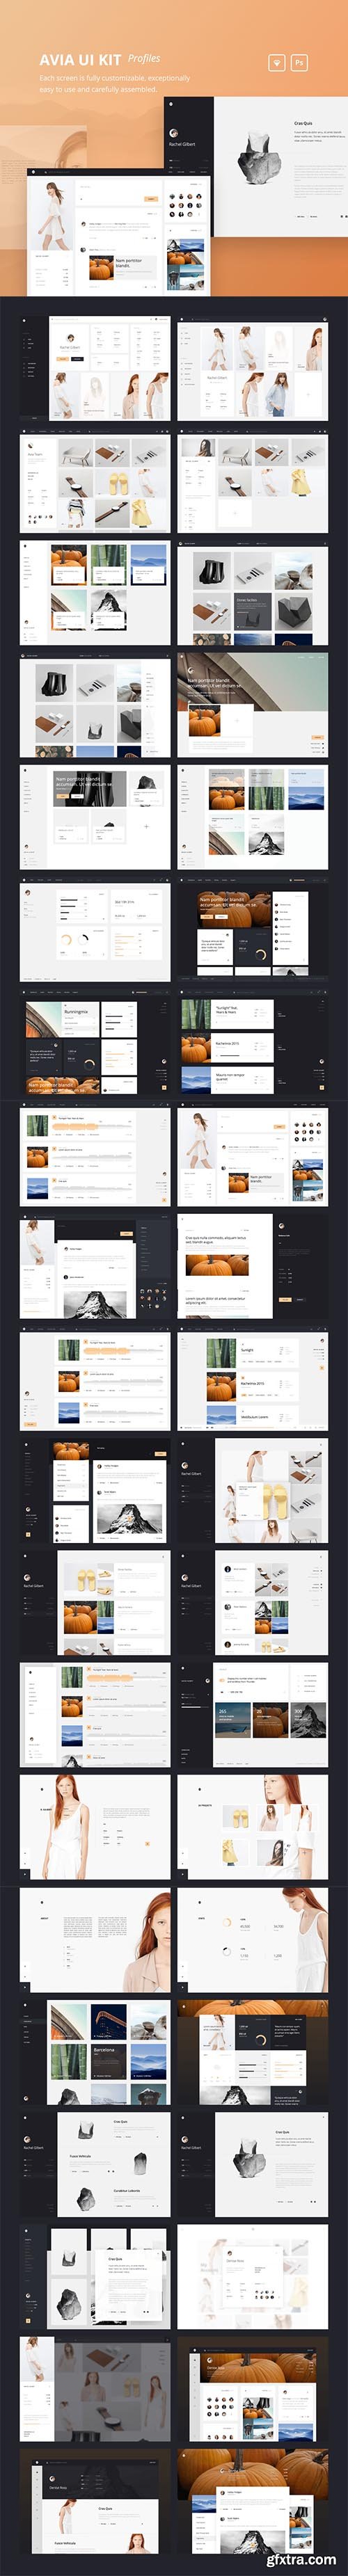 Avia UI Kit: Profiles - Beautiful 40 template profile kit